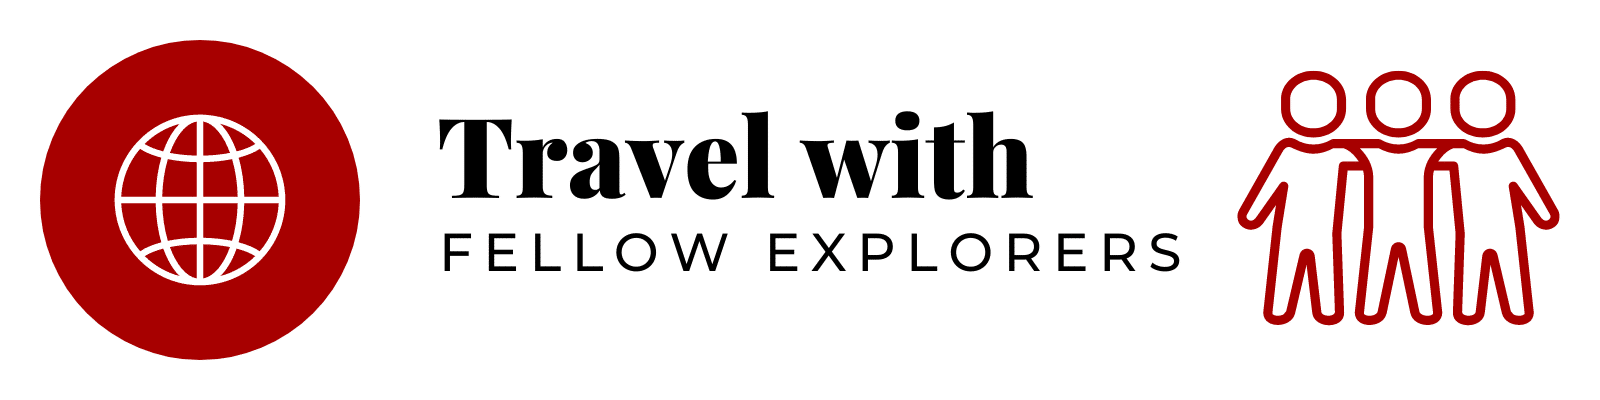 Travel with Fellow Explorers